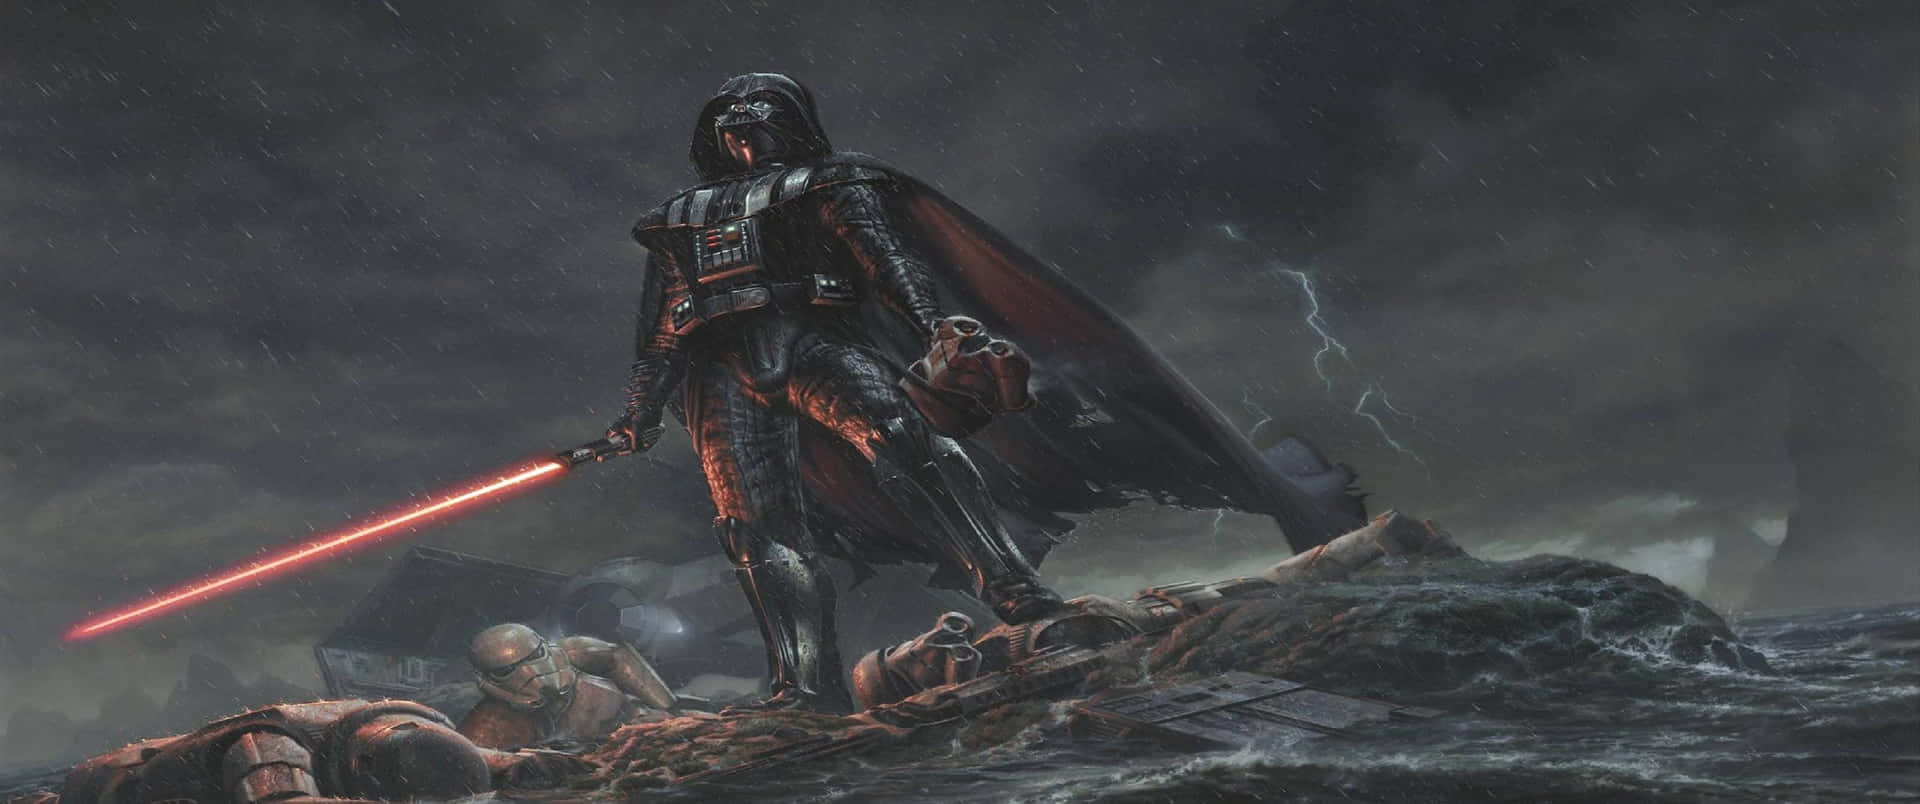 Darth Vader Standing Amongst Destruction Ultra Wide Wallpaper